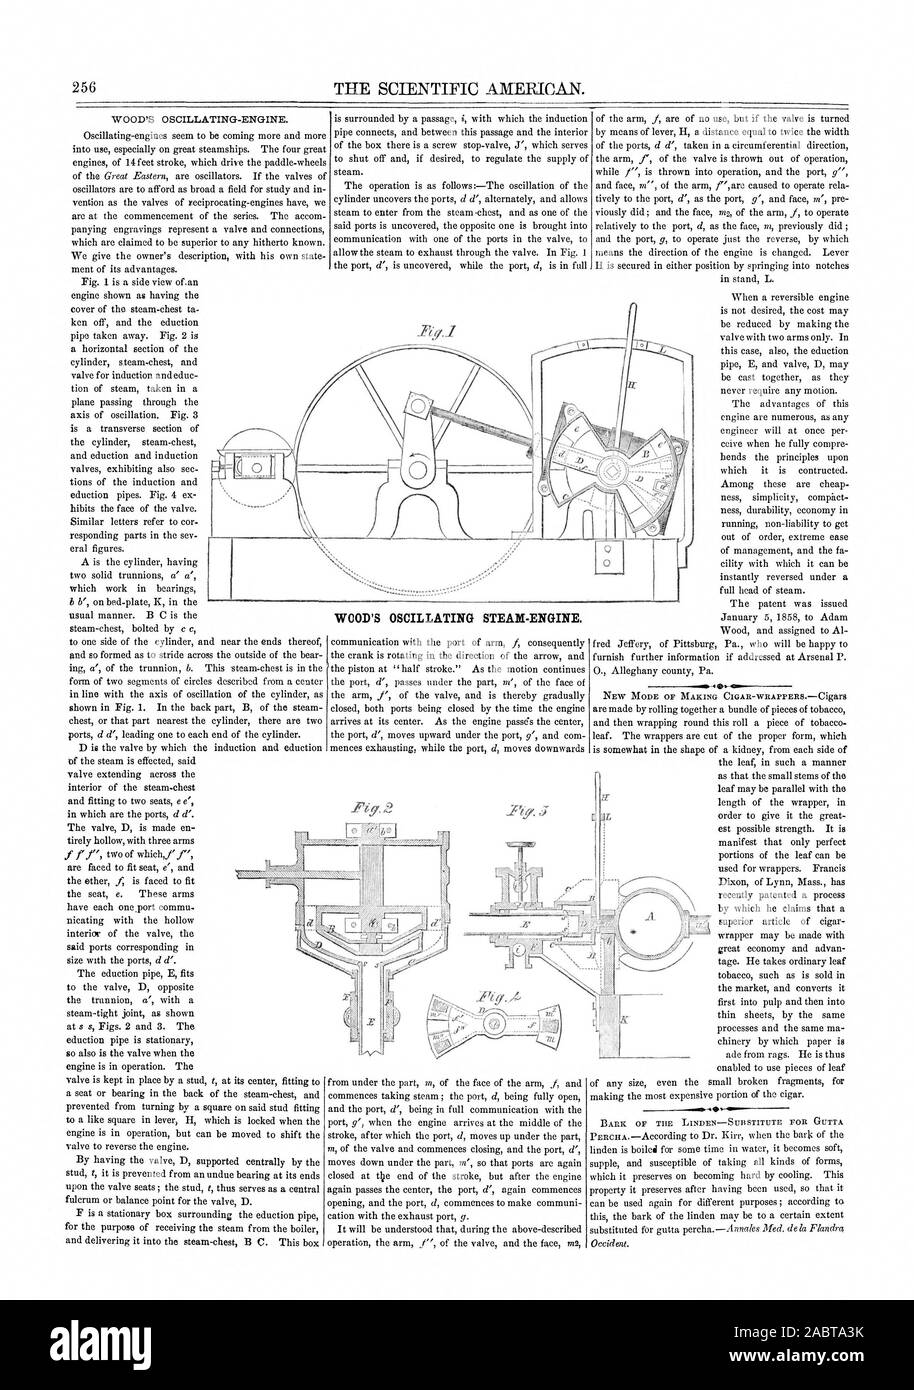 WOOD'S OSCILLATING STEAM-ENGINE., scientific american, 1859-10-15 Stock Photo